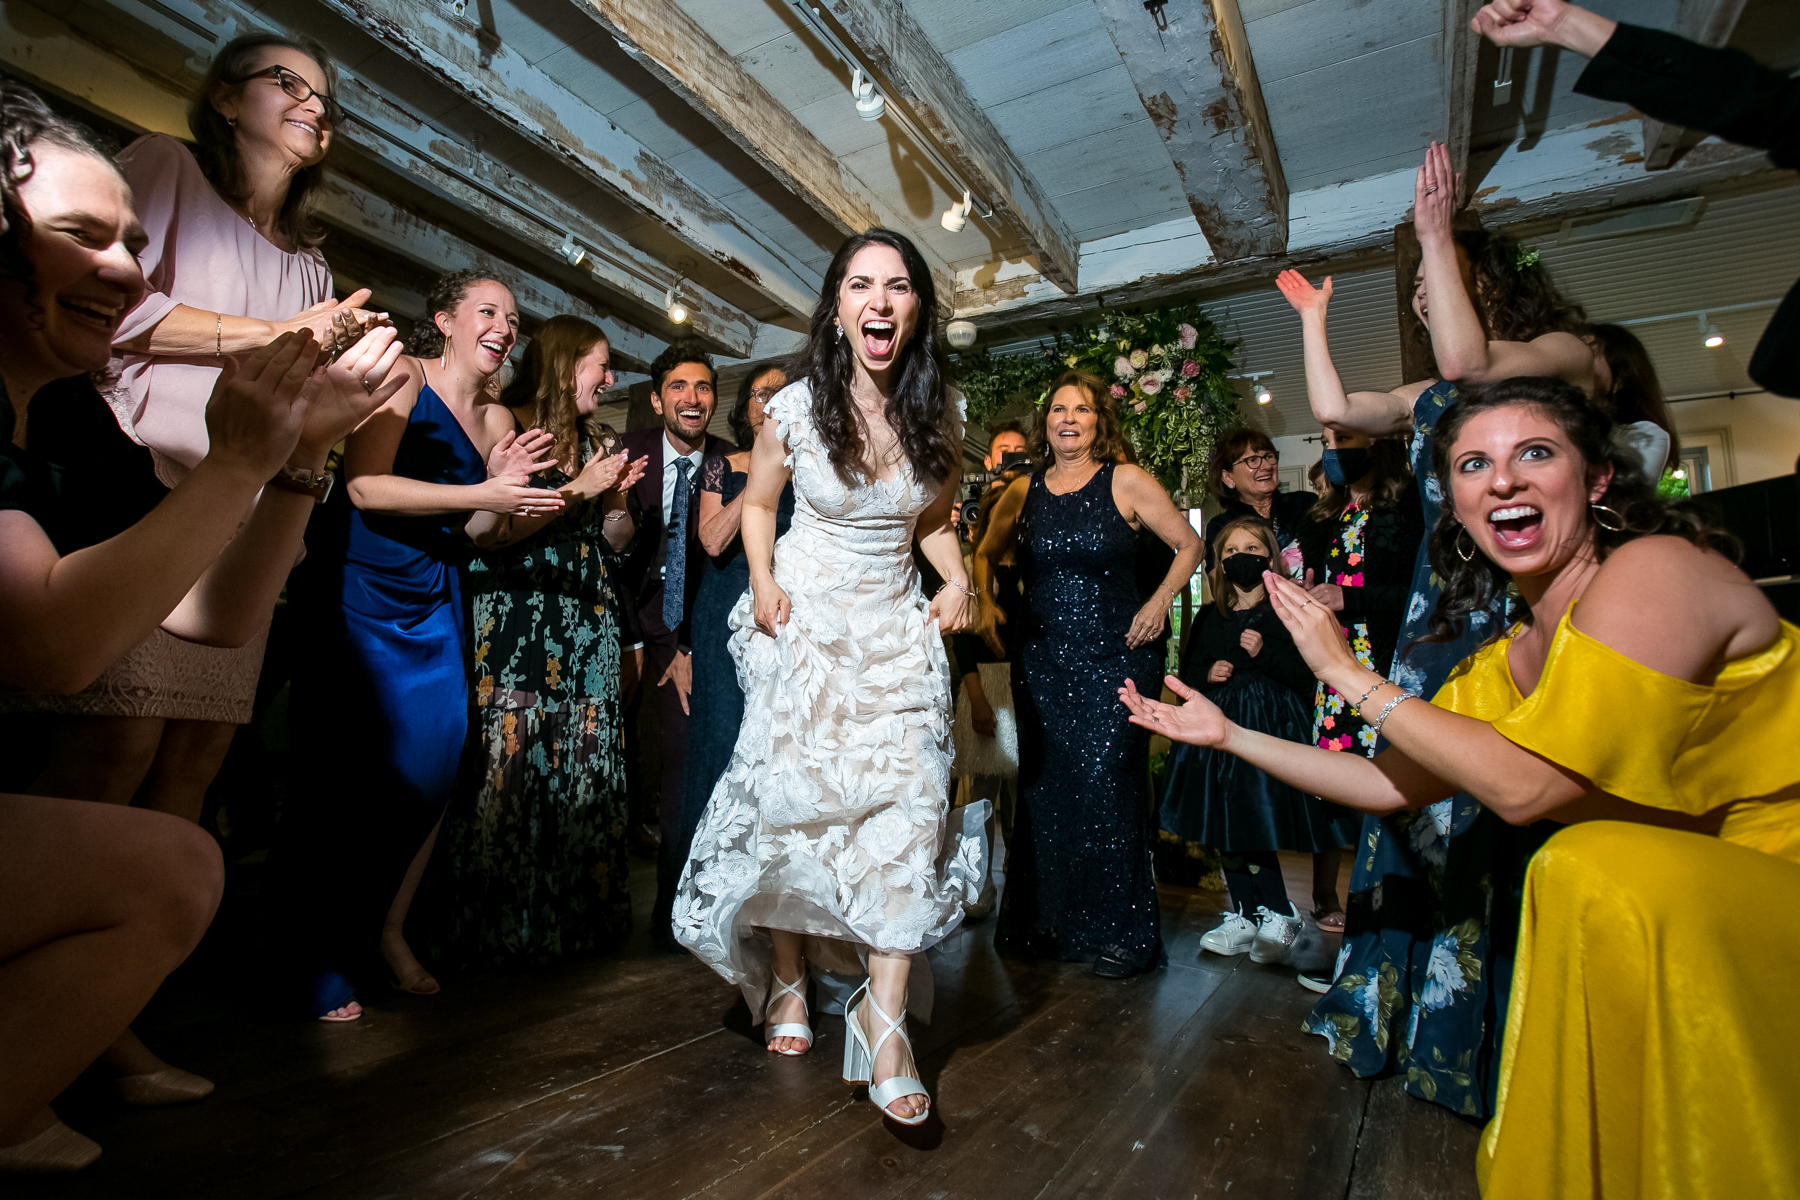 dancing during a wedding reception at the Berkshire Botanical Gardens